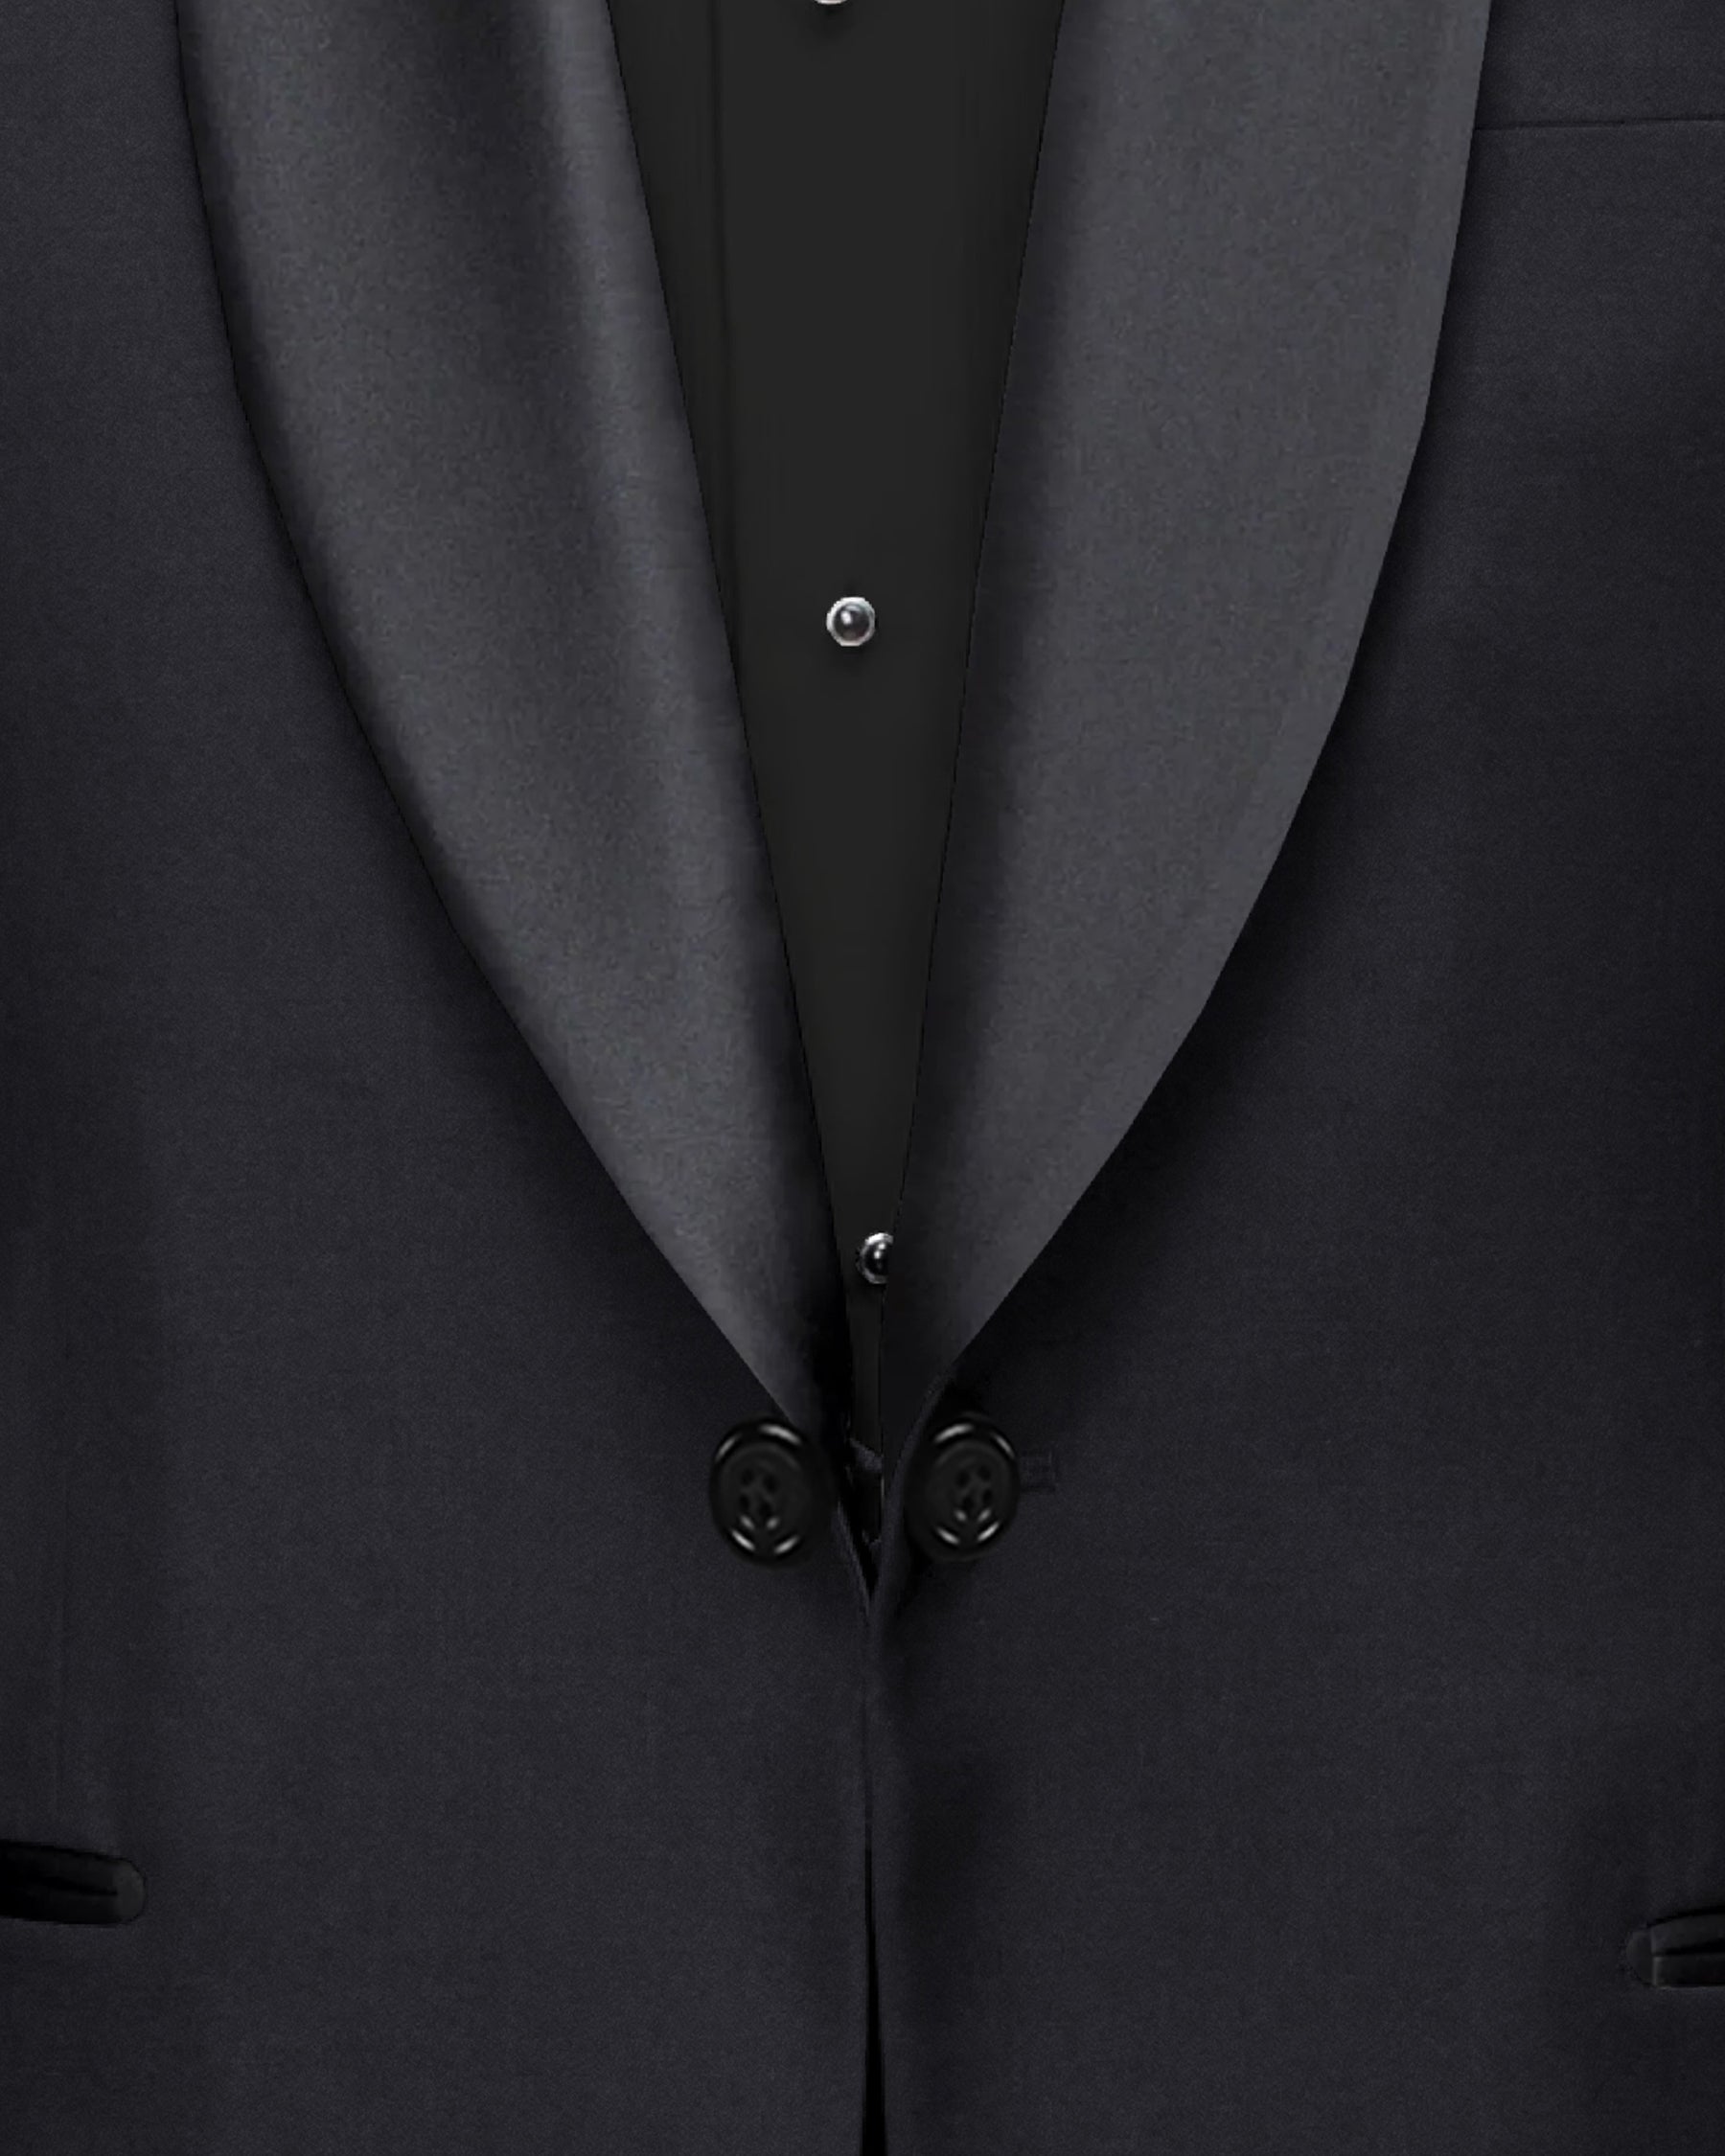 Jade Black Textured with Slight Sheen Dinner Tuxedo Suit